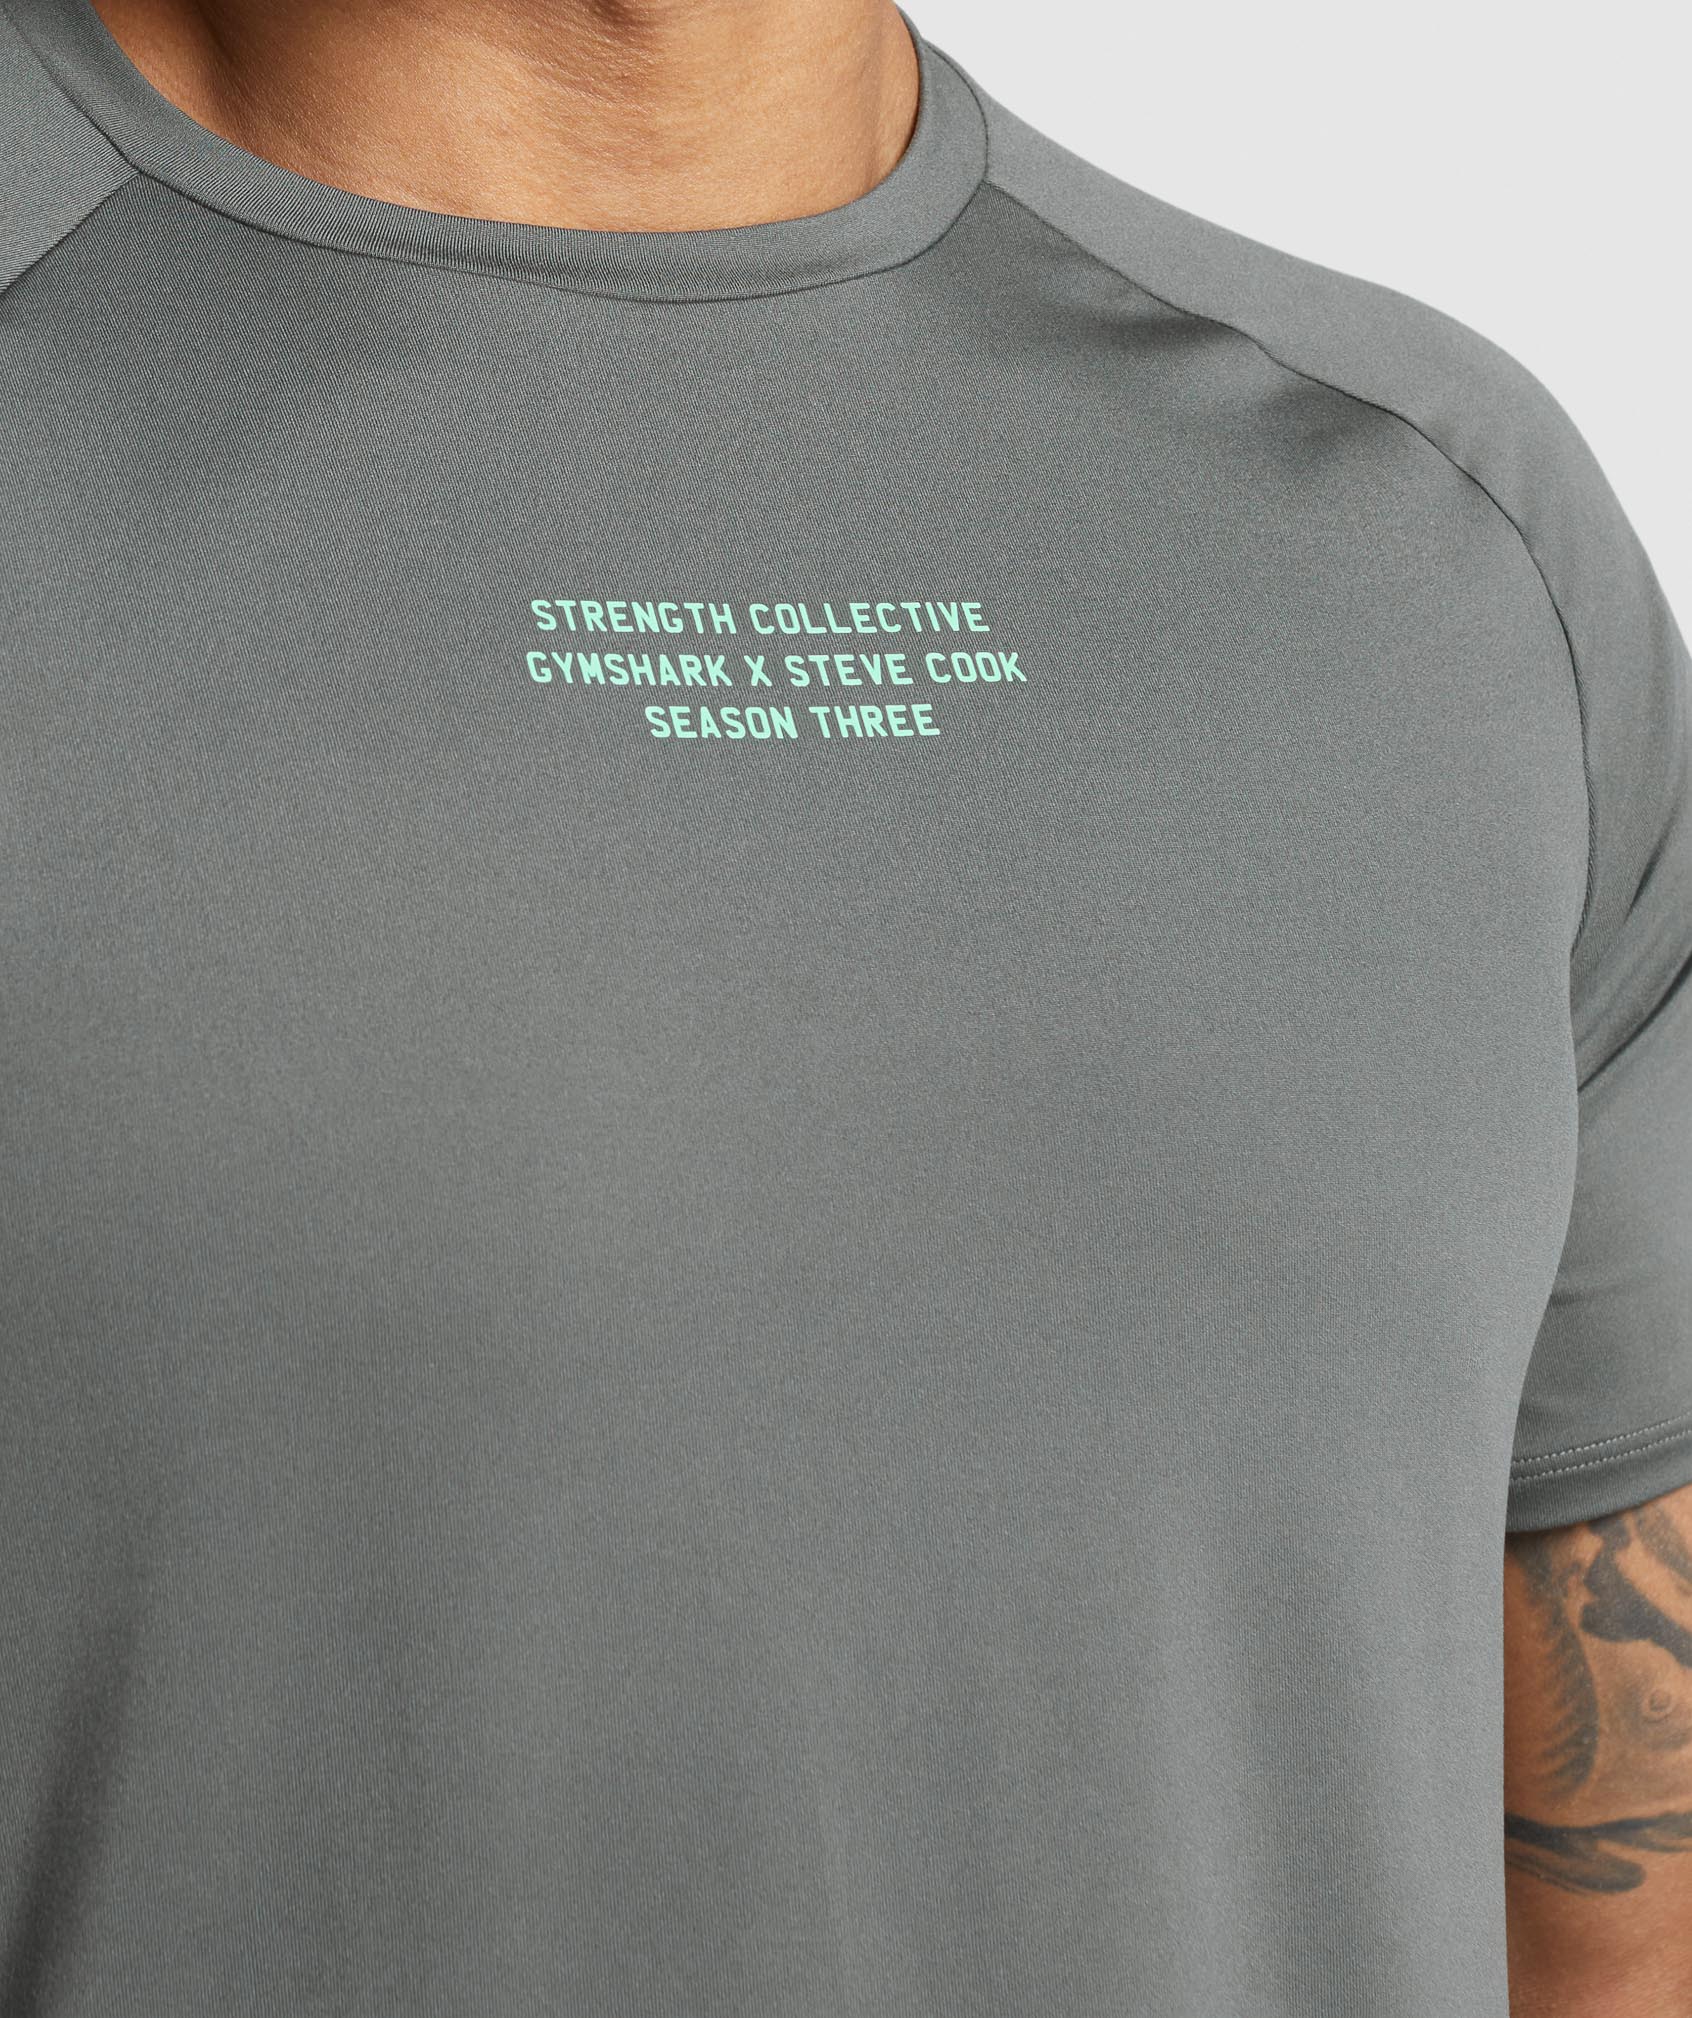 Gymshark//Steve Cook T-Shirt product image 5